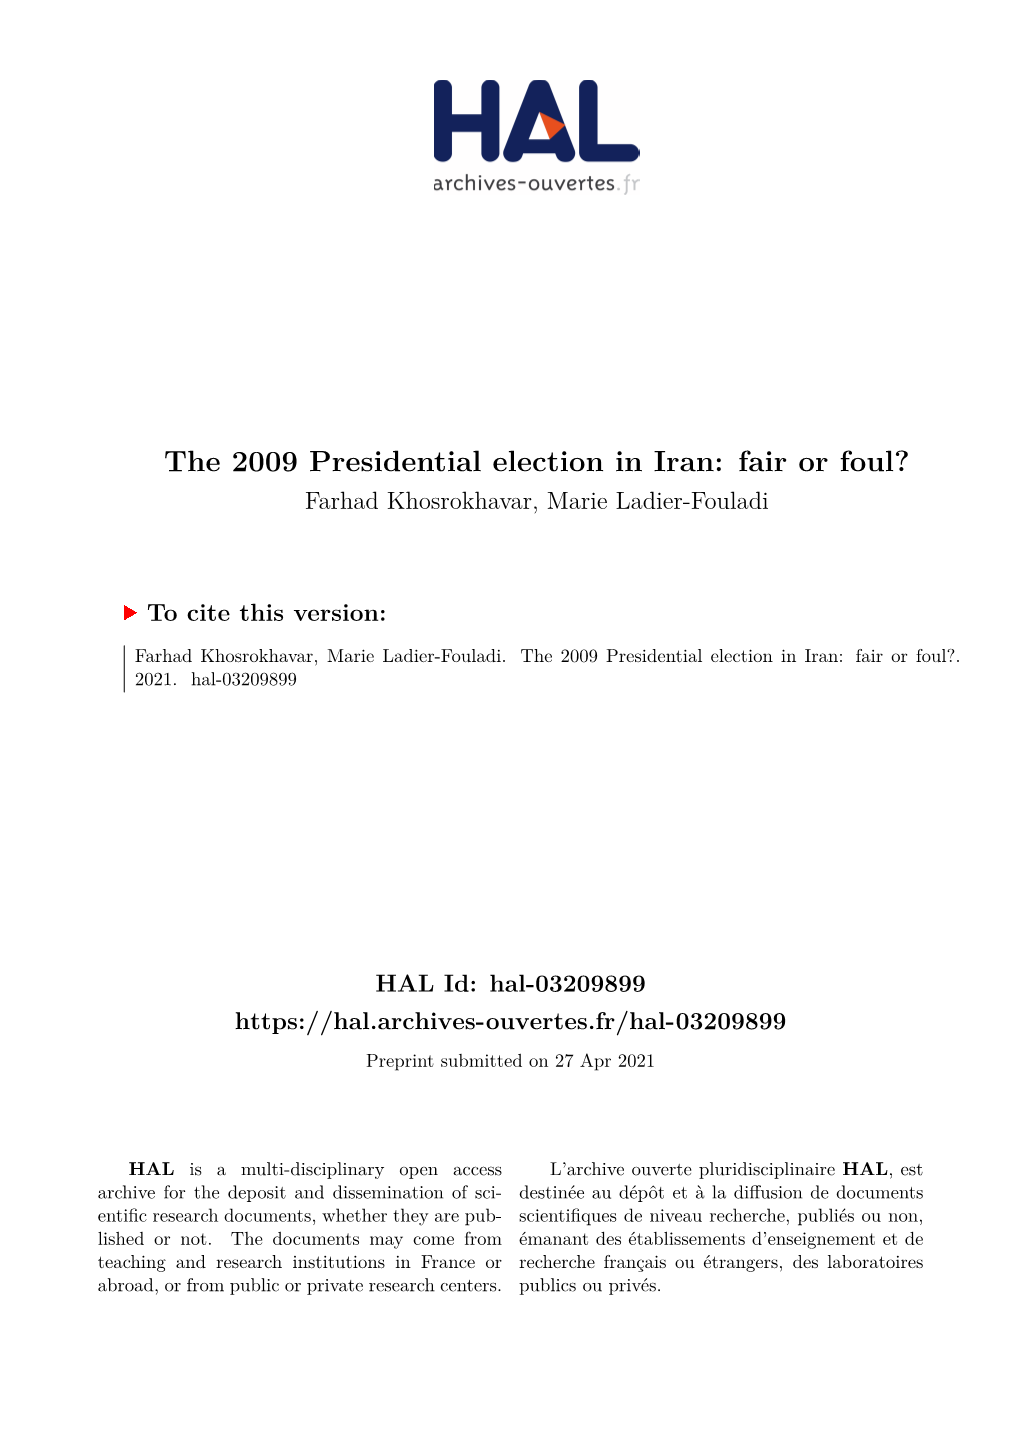 The 2009 Presidential Election in Iran: Fair Or Foul? Farhad Khosrokhavar, Marie Ladier-Fouladi